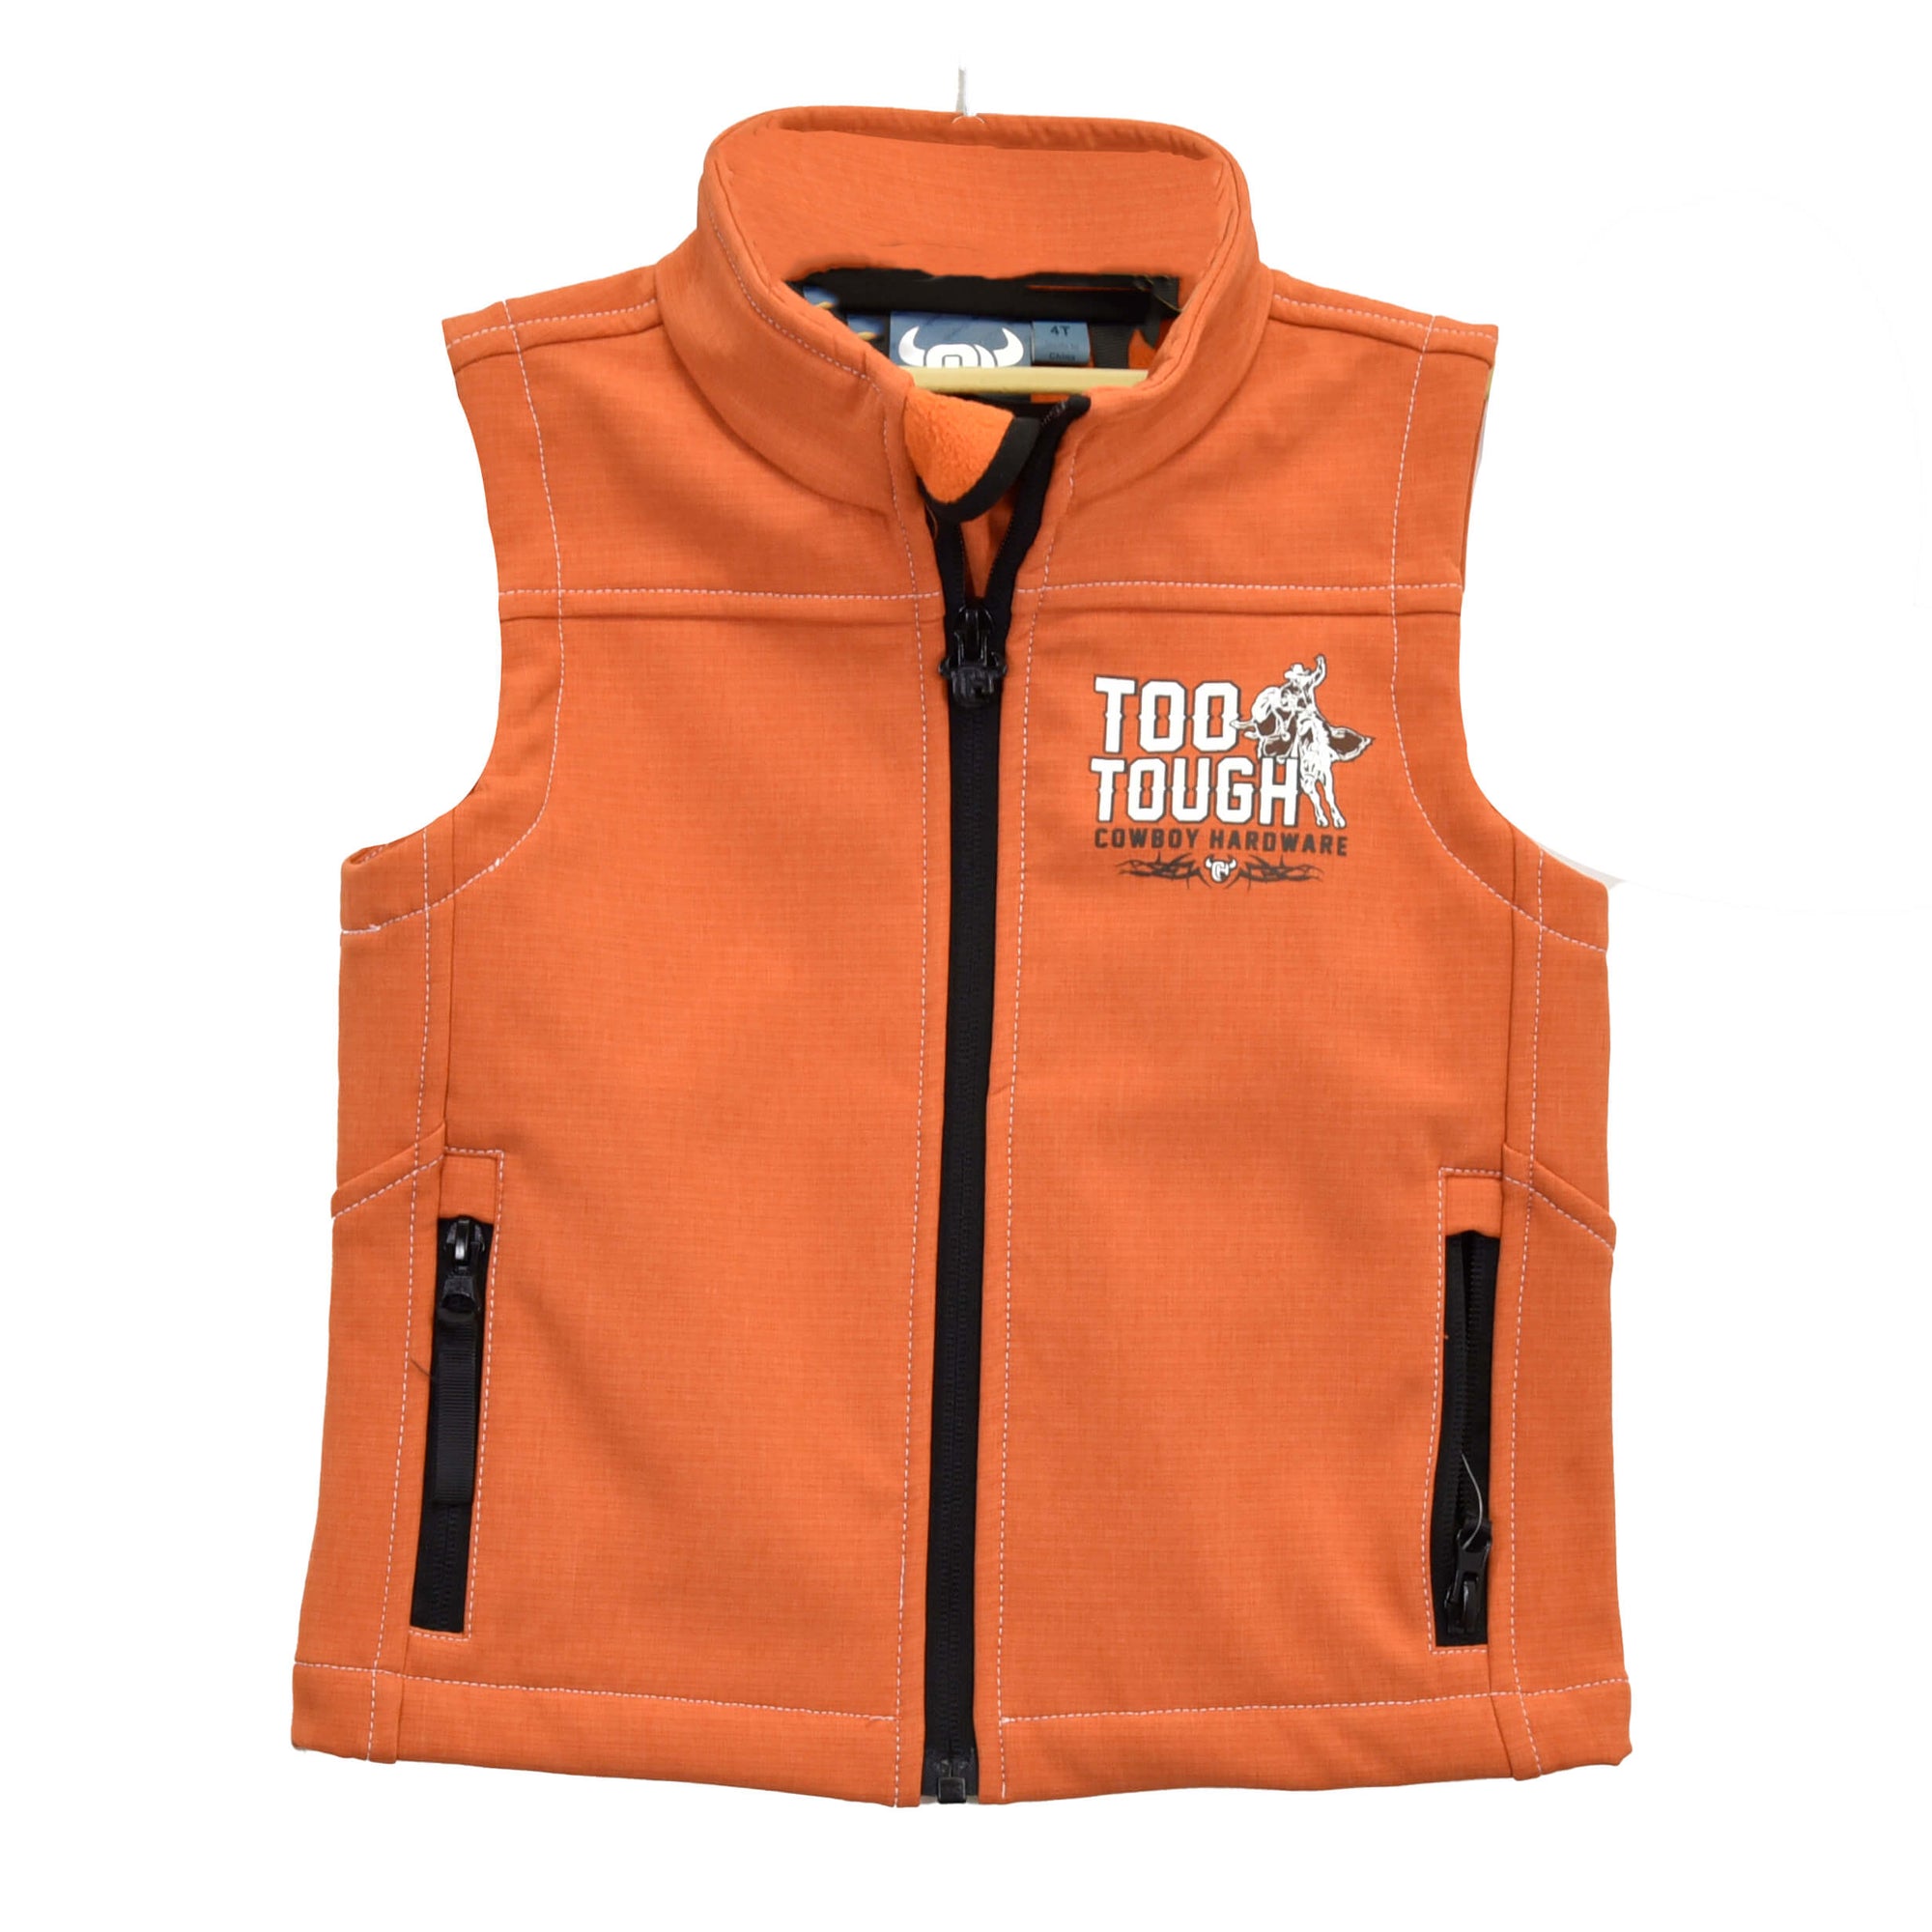 Infant/Toddler Boy's Too Tough Burnt Orange Poly Shell Vest from Cowboy Hardware